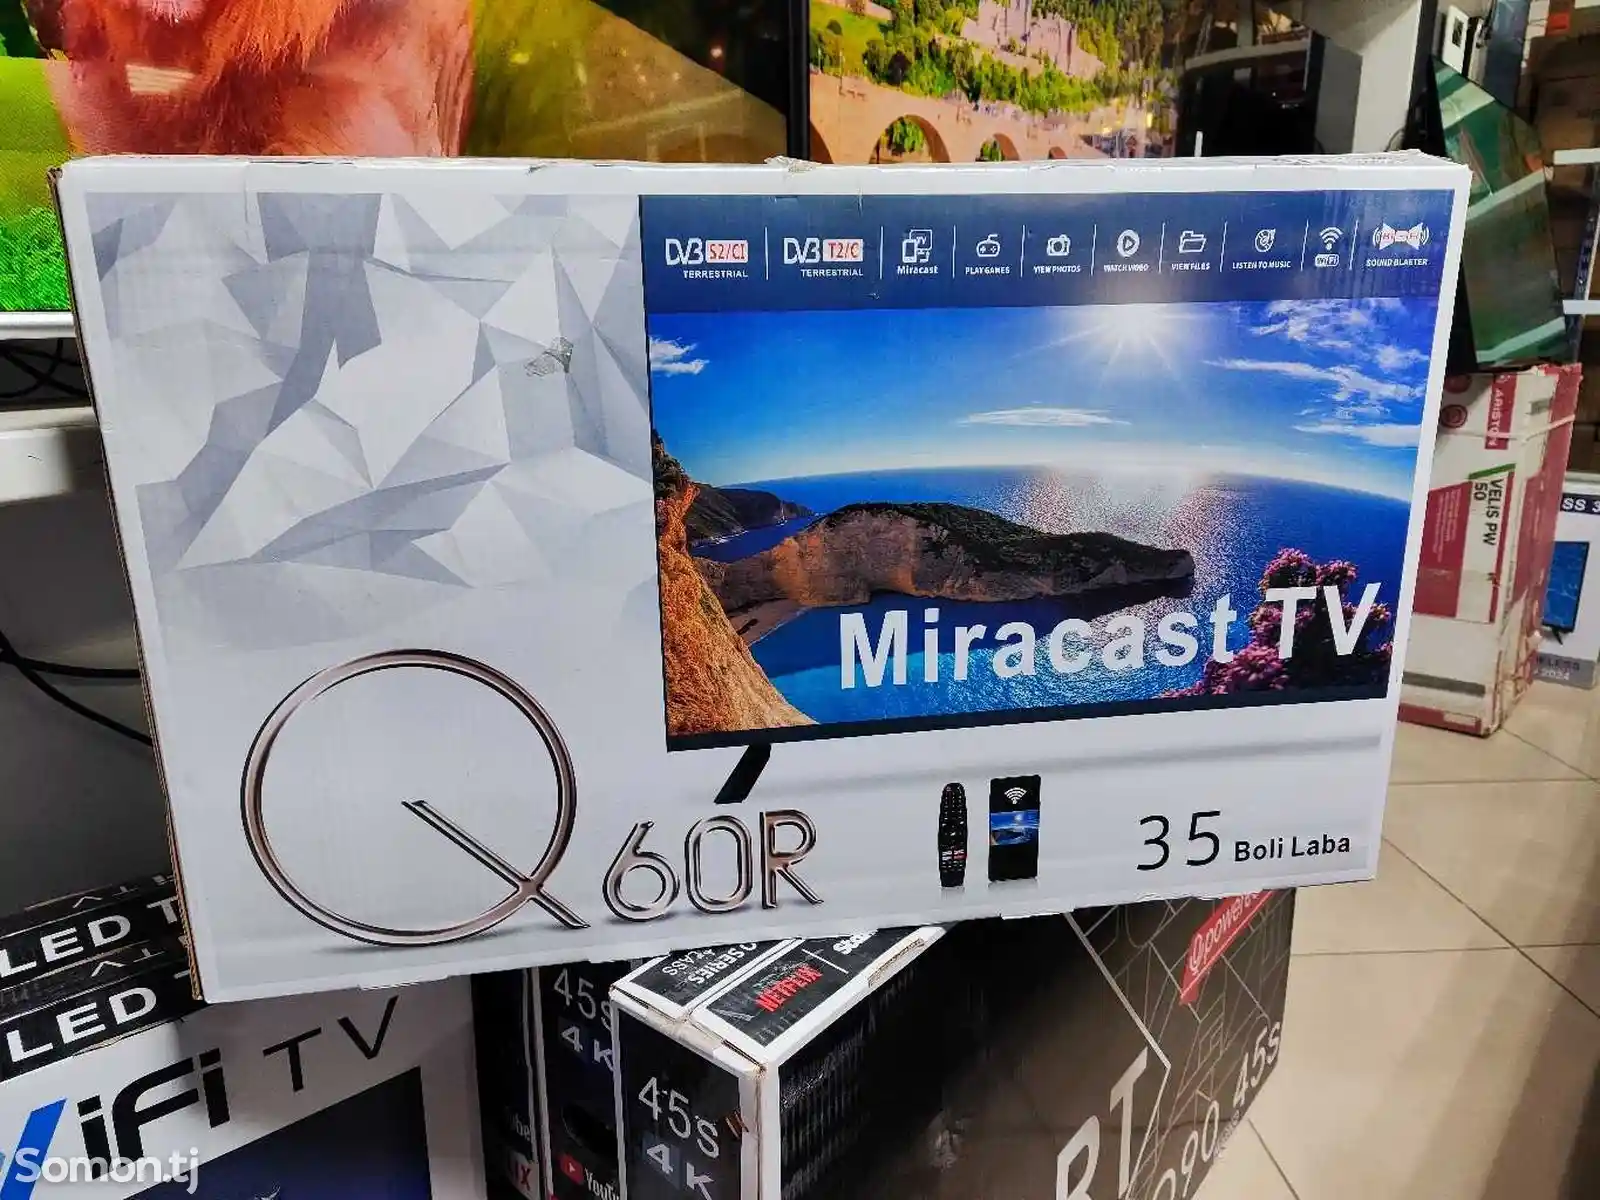 Телевизор Samsung Miracast Tv Q60R 35